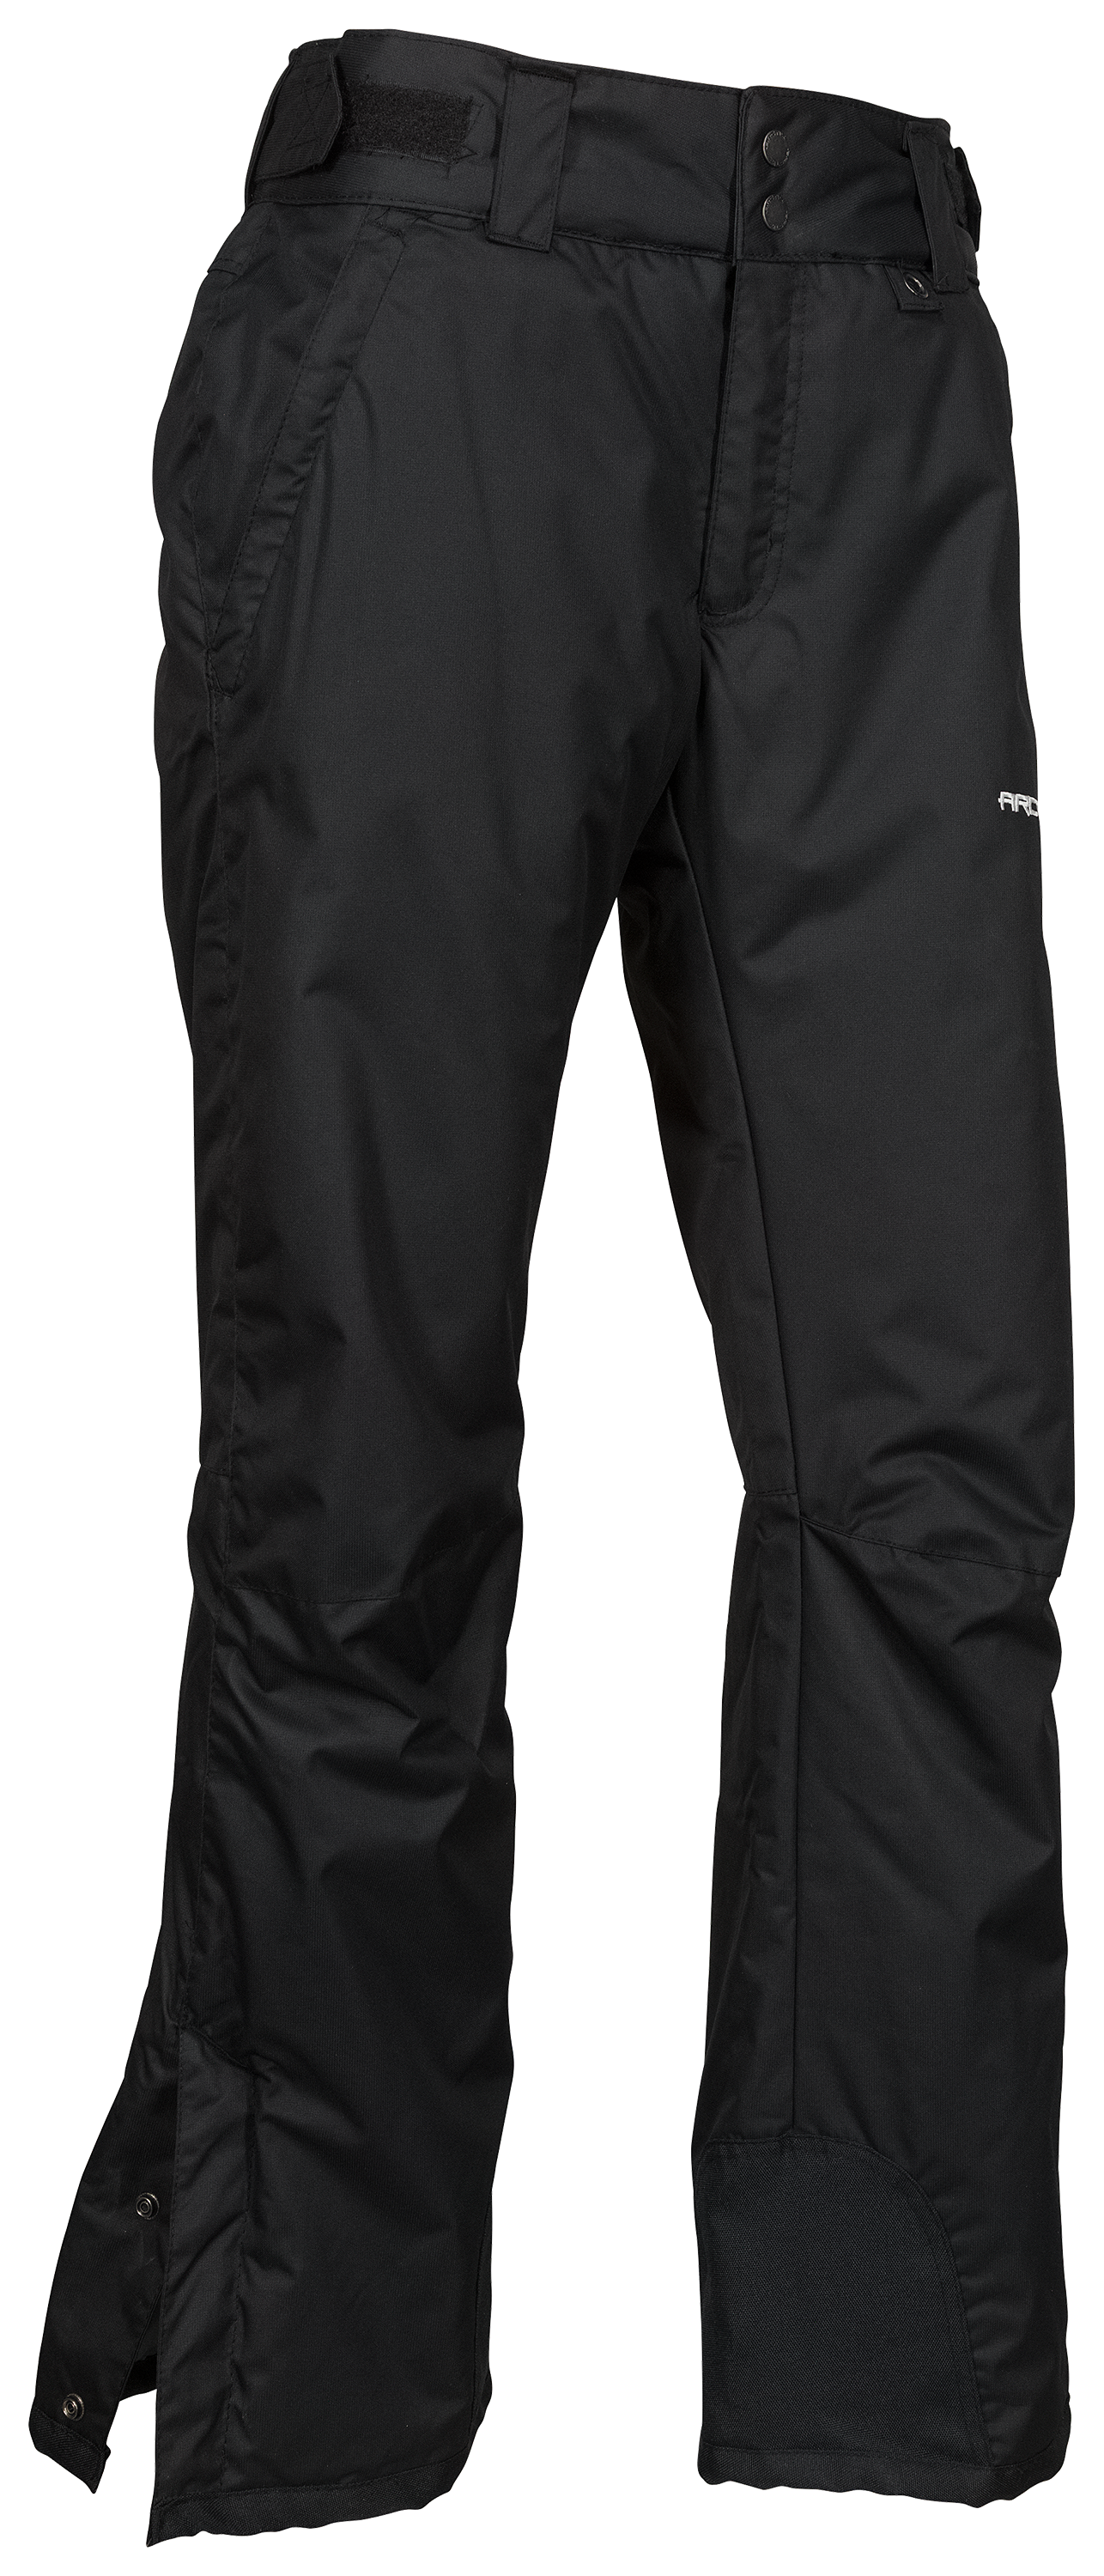  Arctix Women's High Altitude Insulated Jacket, Black